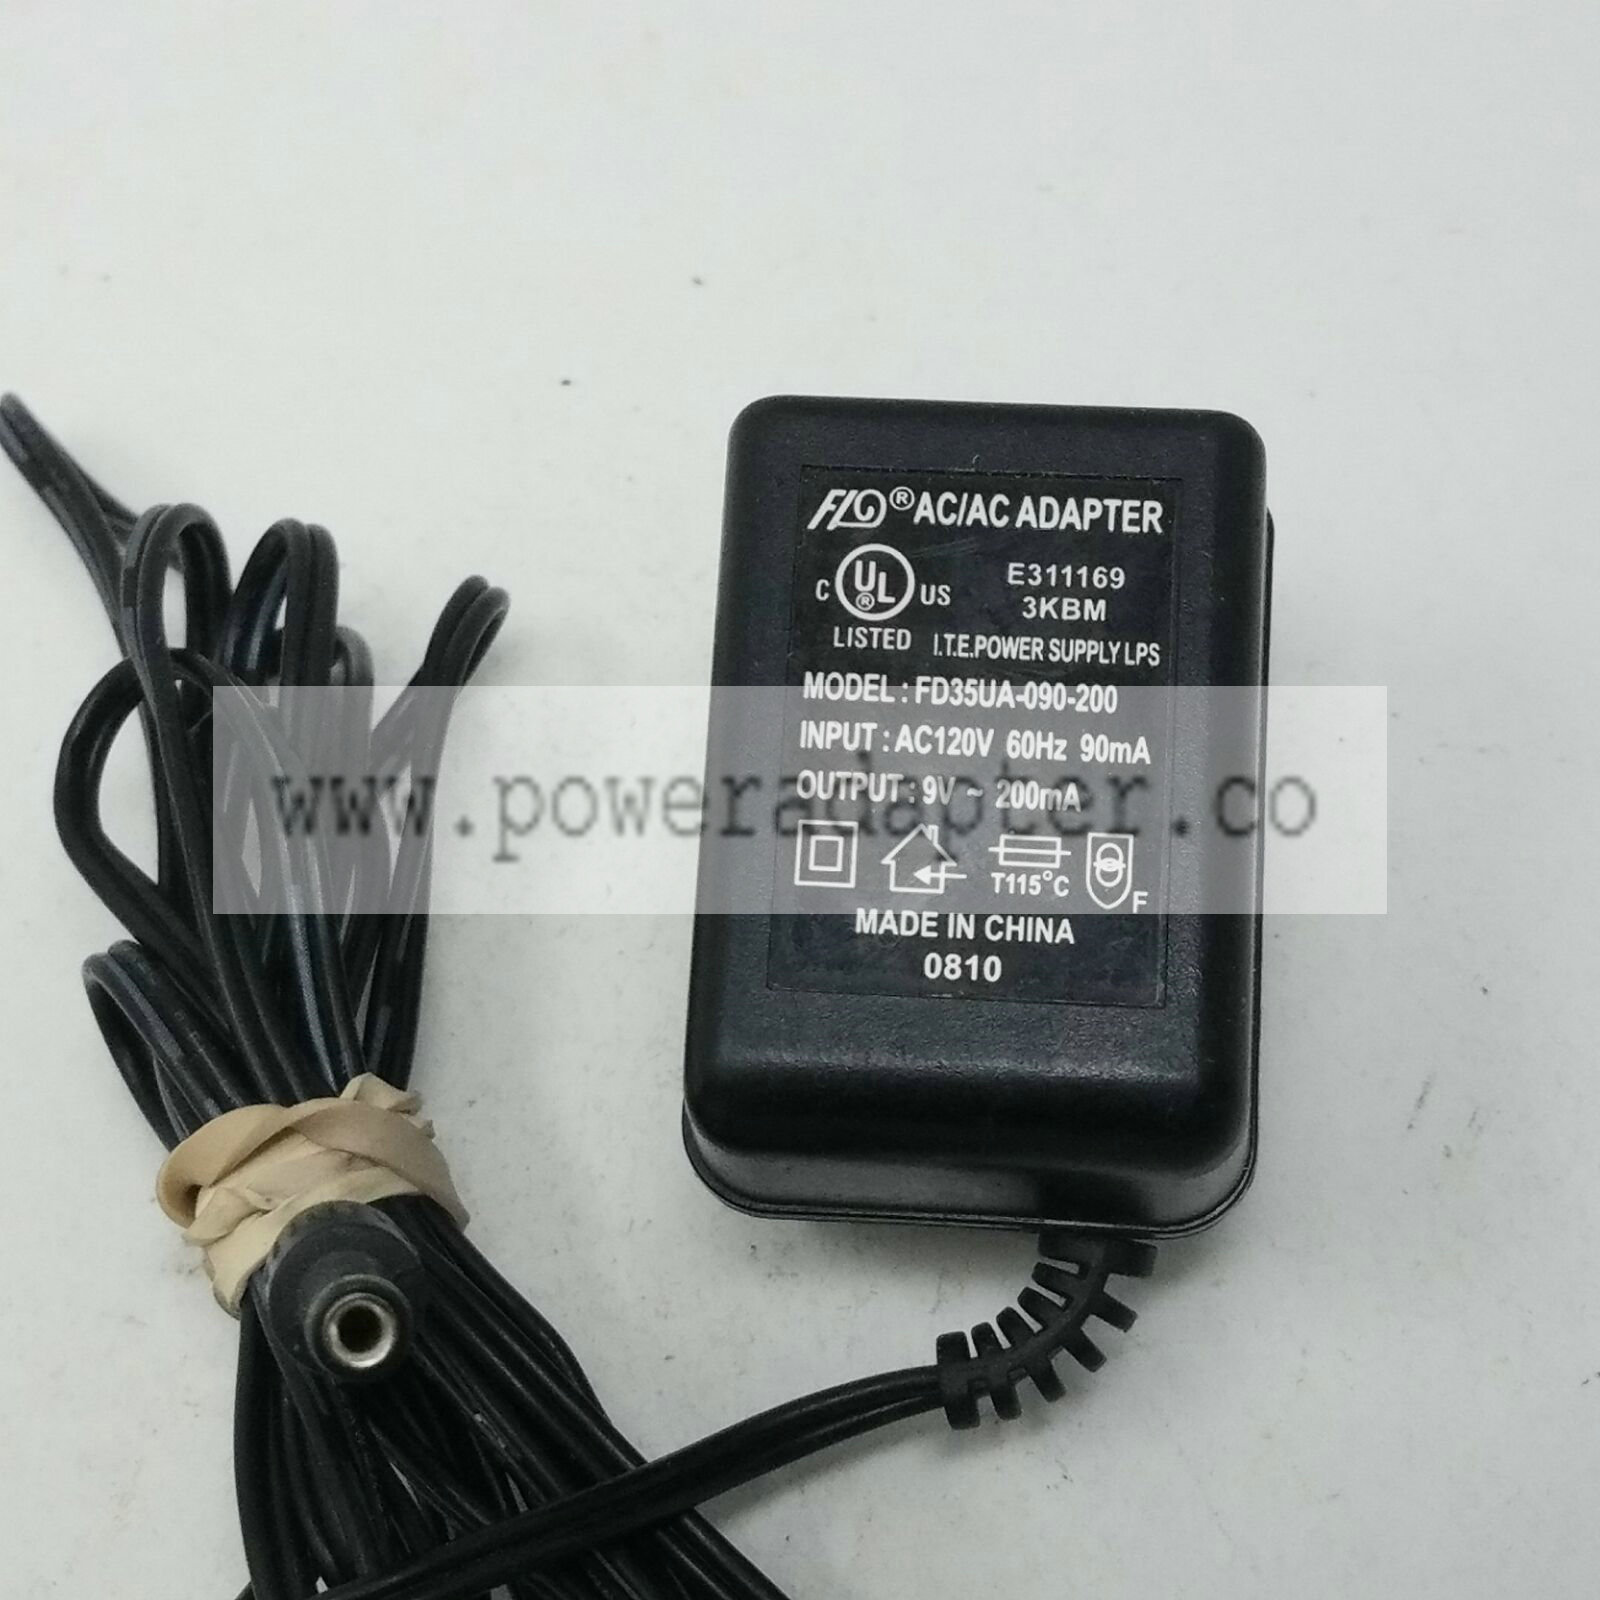 Flo AC Adapter Power Supply FD35UA-090-200 Output 9V 200mA Brand: Flo MPN: FD35UA-090-200 Model: FD35UA-090-200 Ou